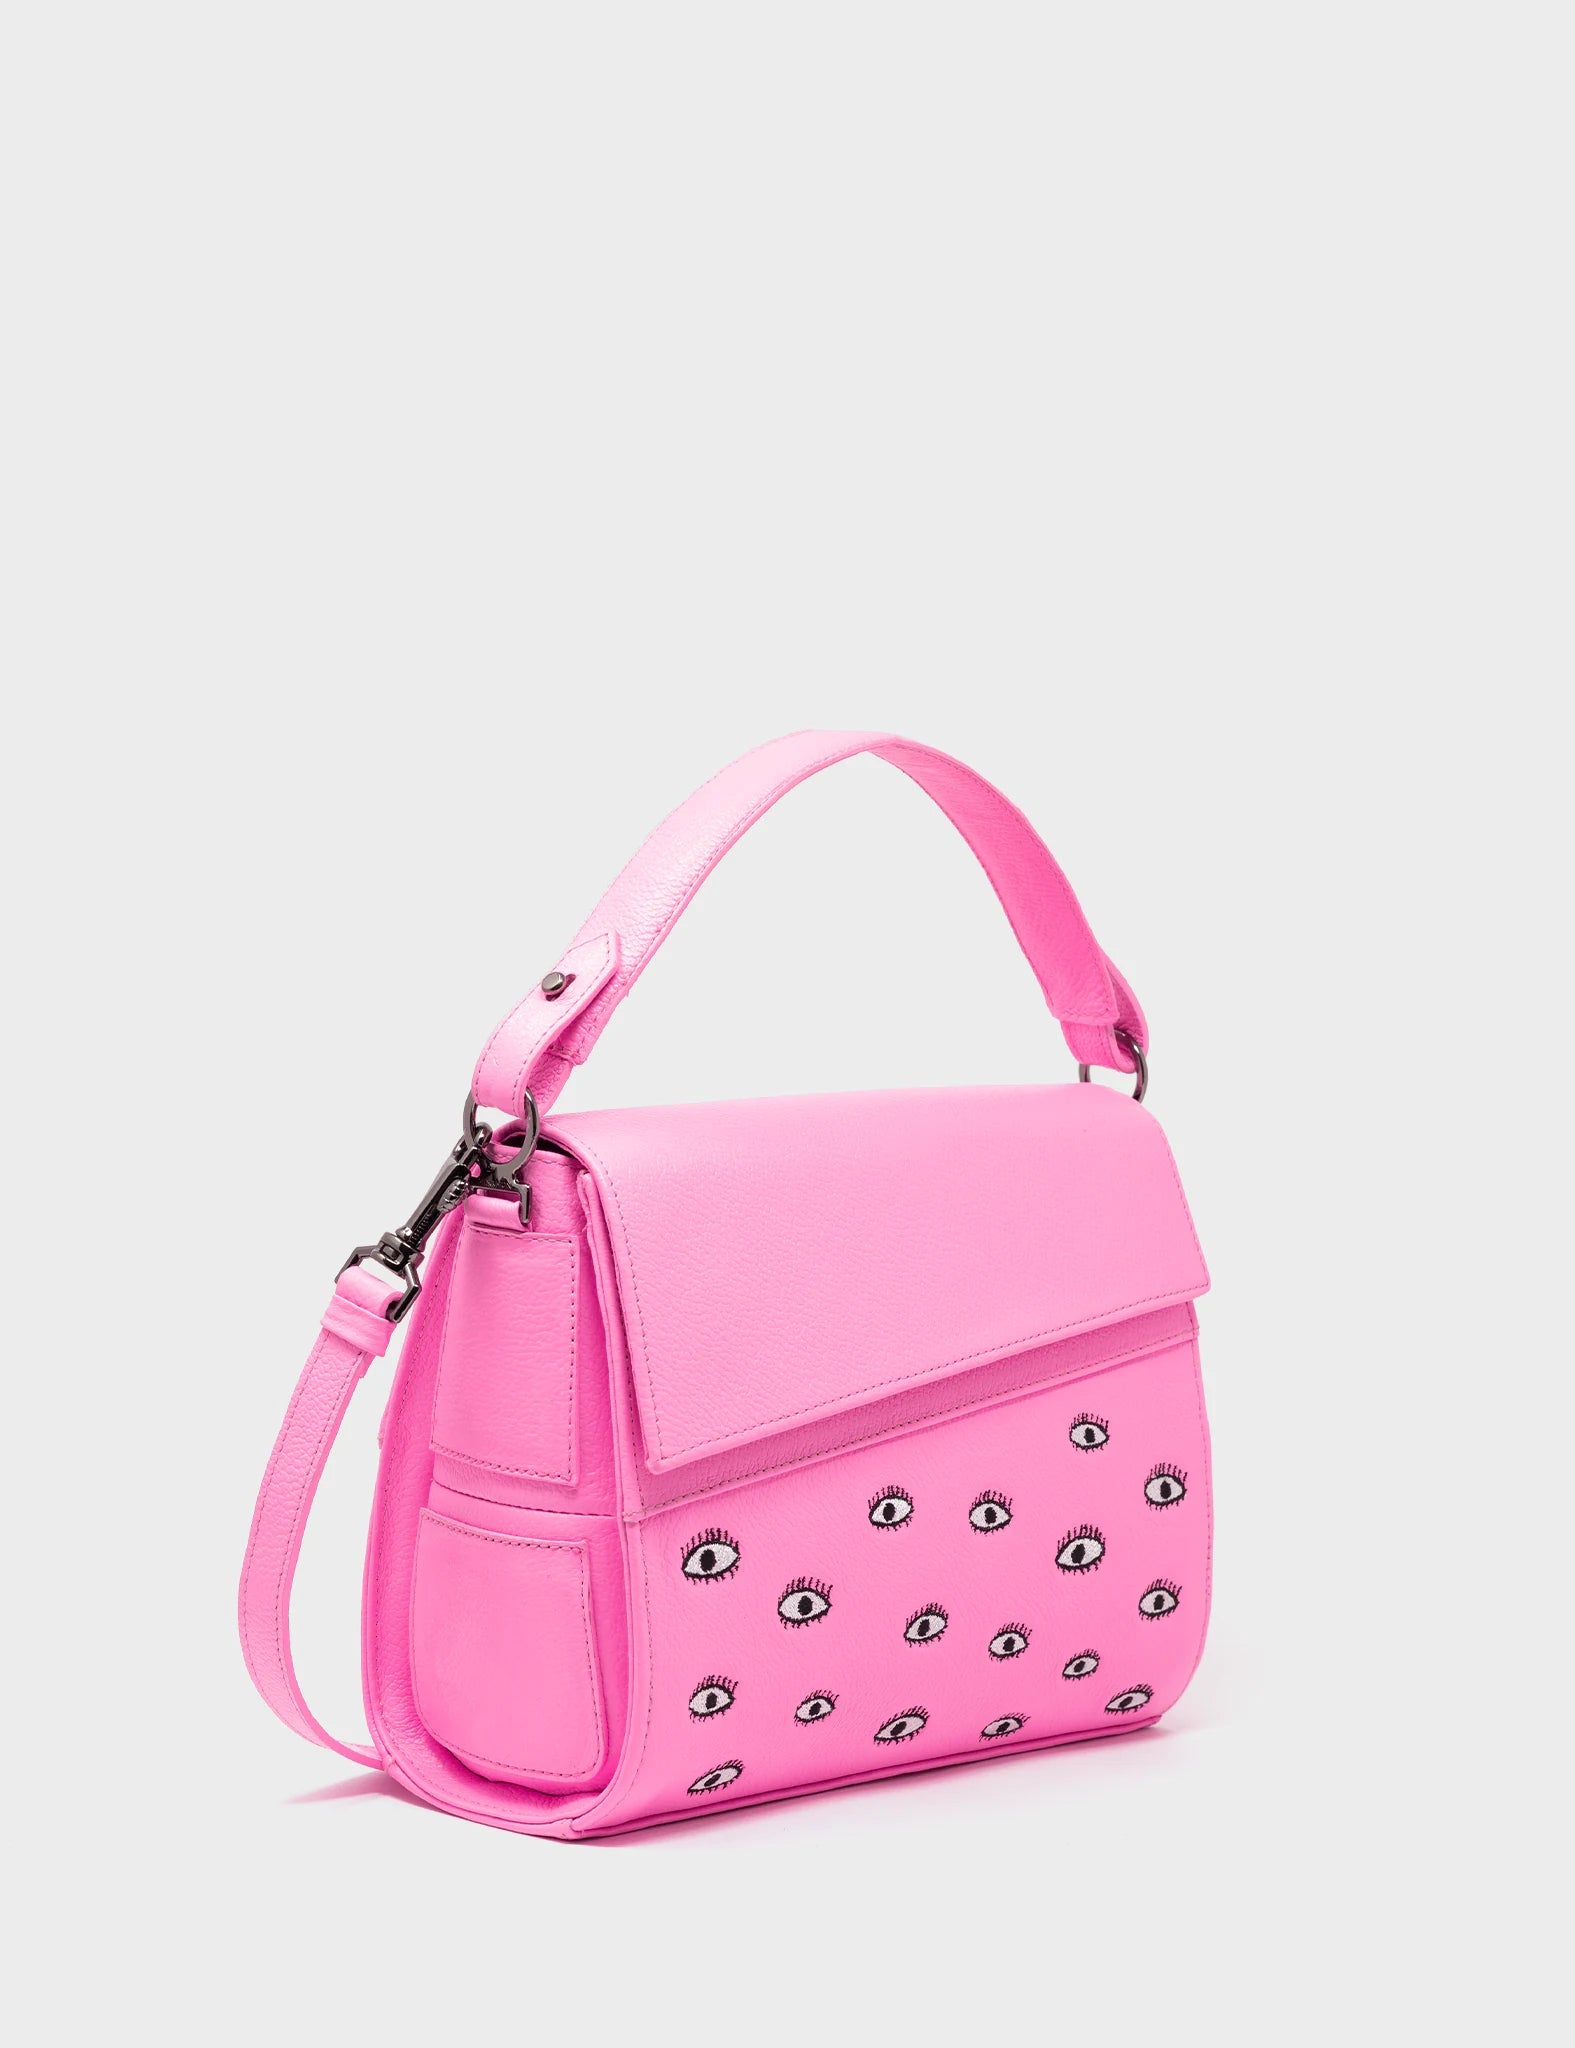 Anastasio Mini Crossbody Handbag Bubblegum Pink Leather - All Over Eyes Embroidery - Front corner angle view